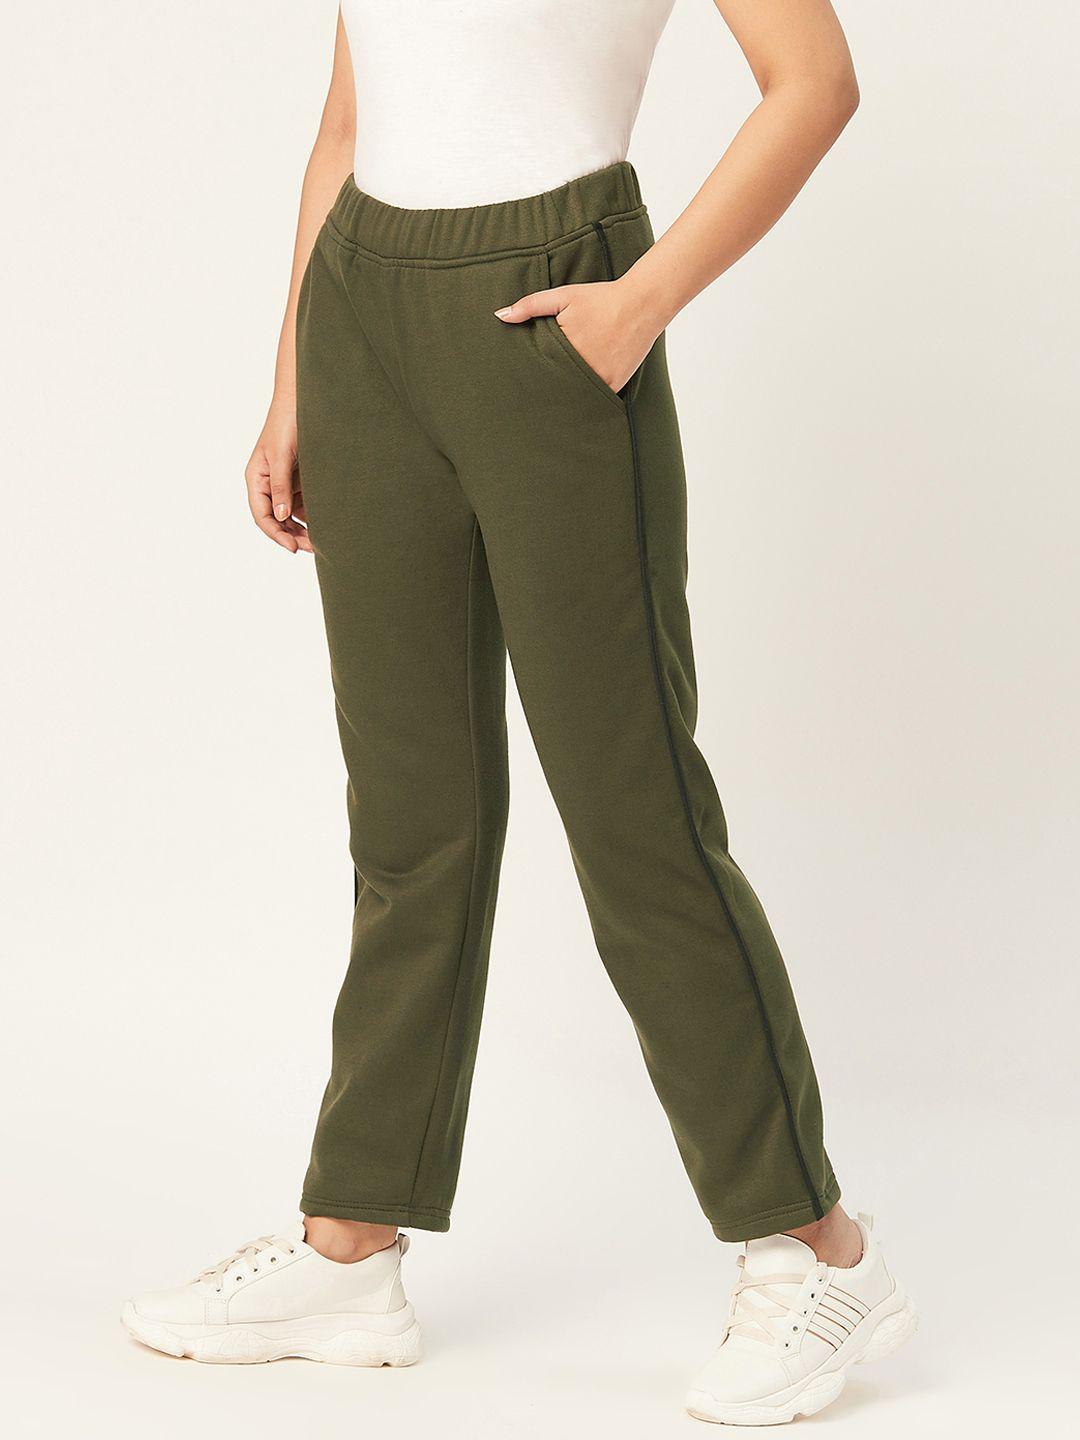 alsace-lorraine-paris-women-olive-green-solid-track-pants